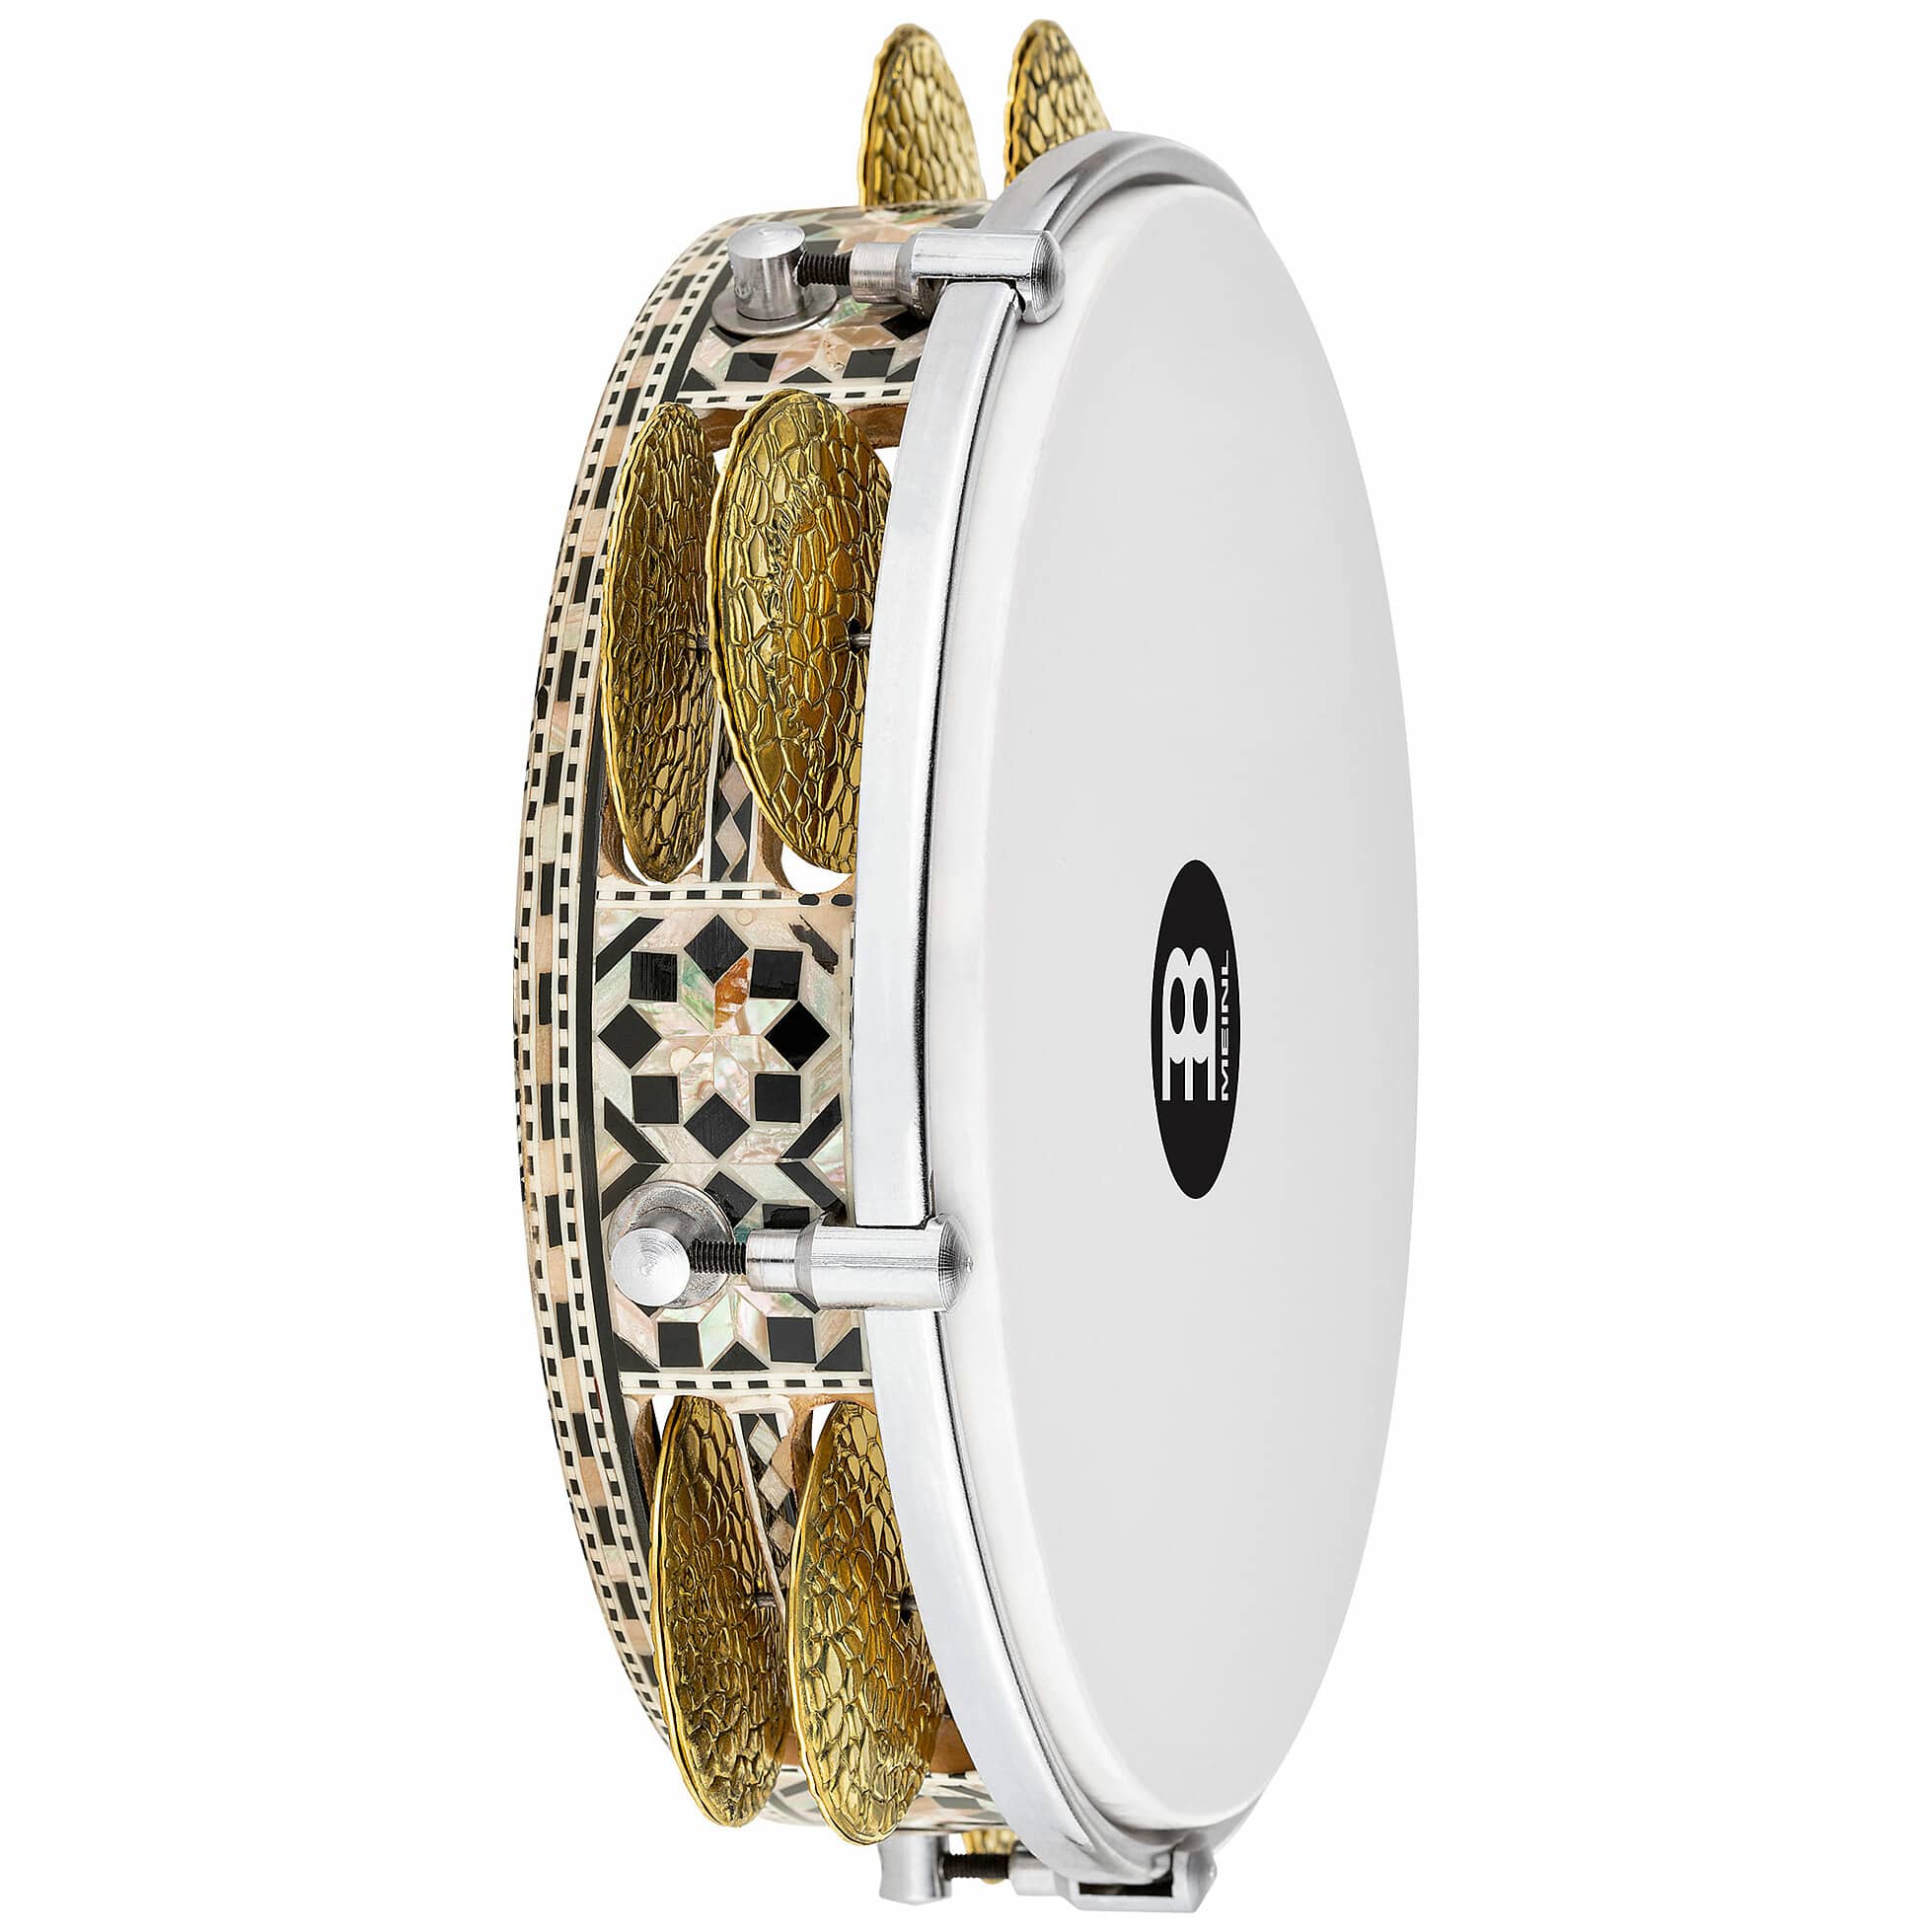 Meinl Percussion AERIQ1 - Artisan Edition Riq Drum - 8 3/4" White Pearl, Mosaic Royale 1